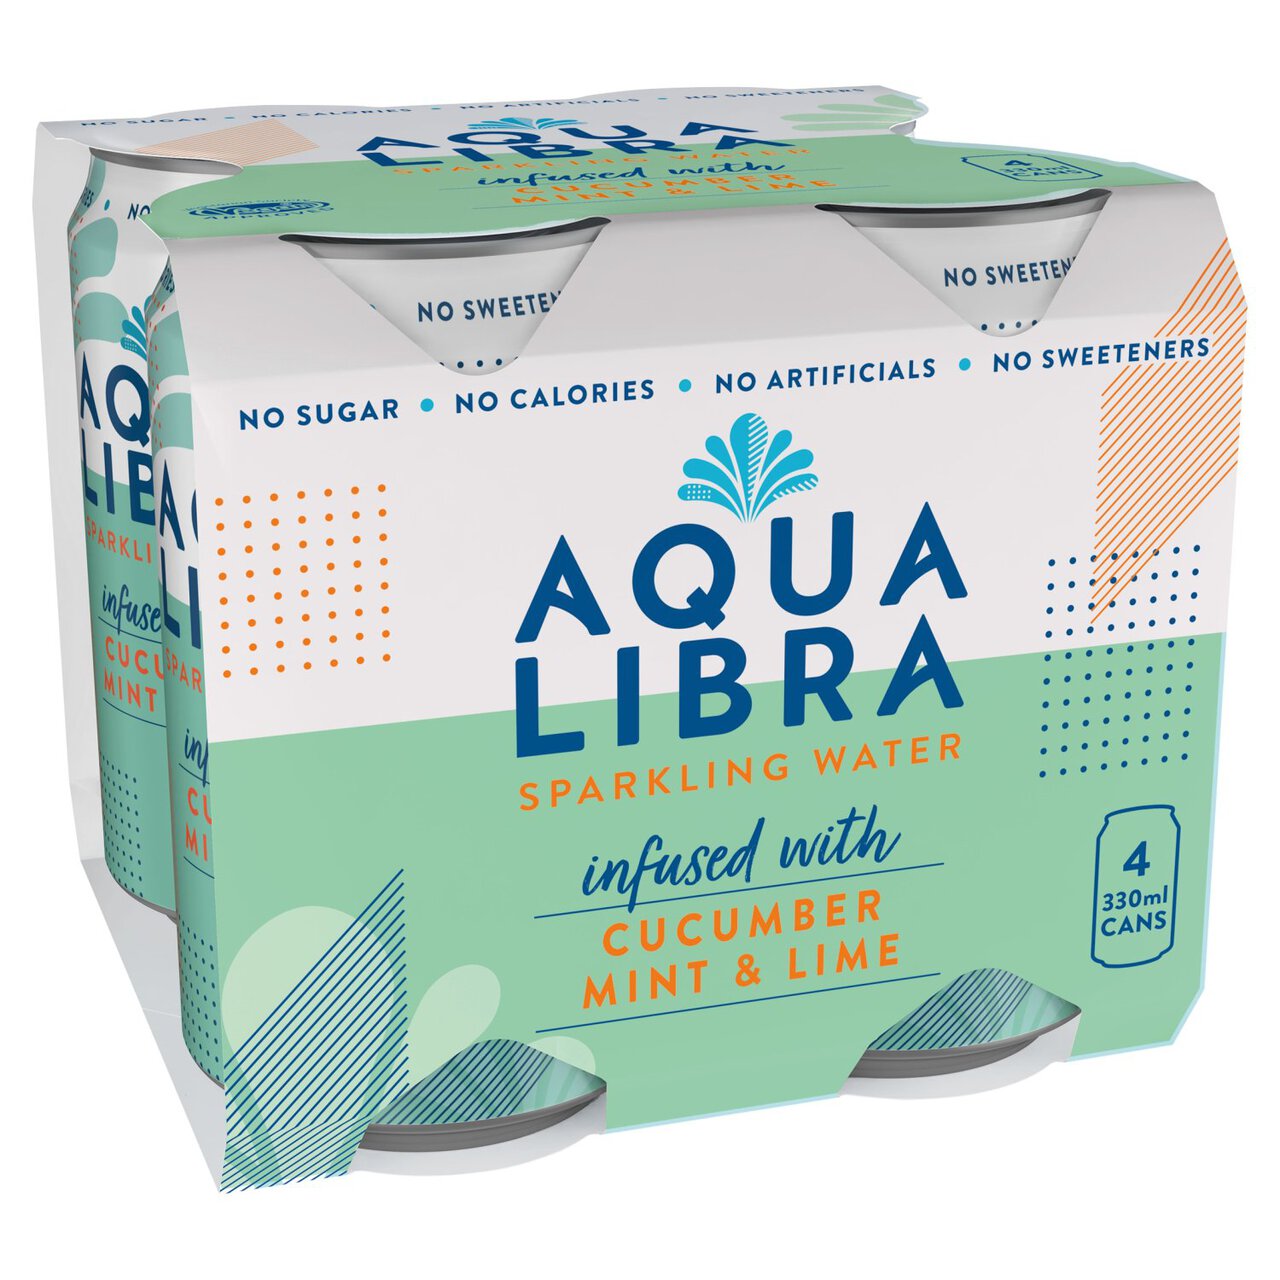 Aqua Libra Cucumber, Mint & Lime Infused Sparkling Water 4 x 330ml